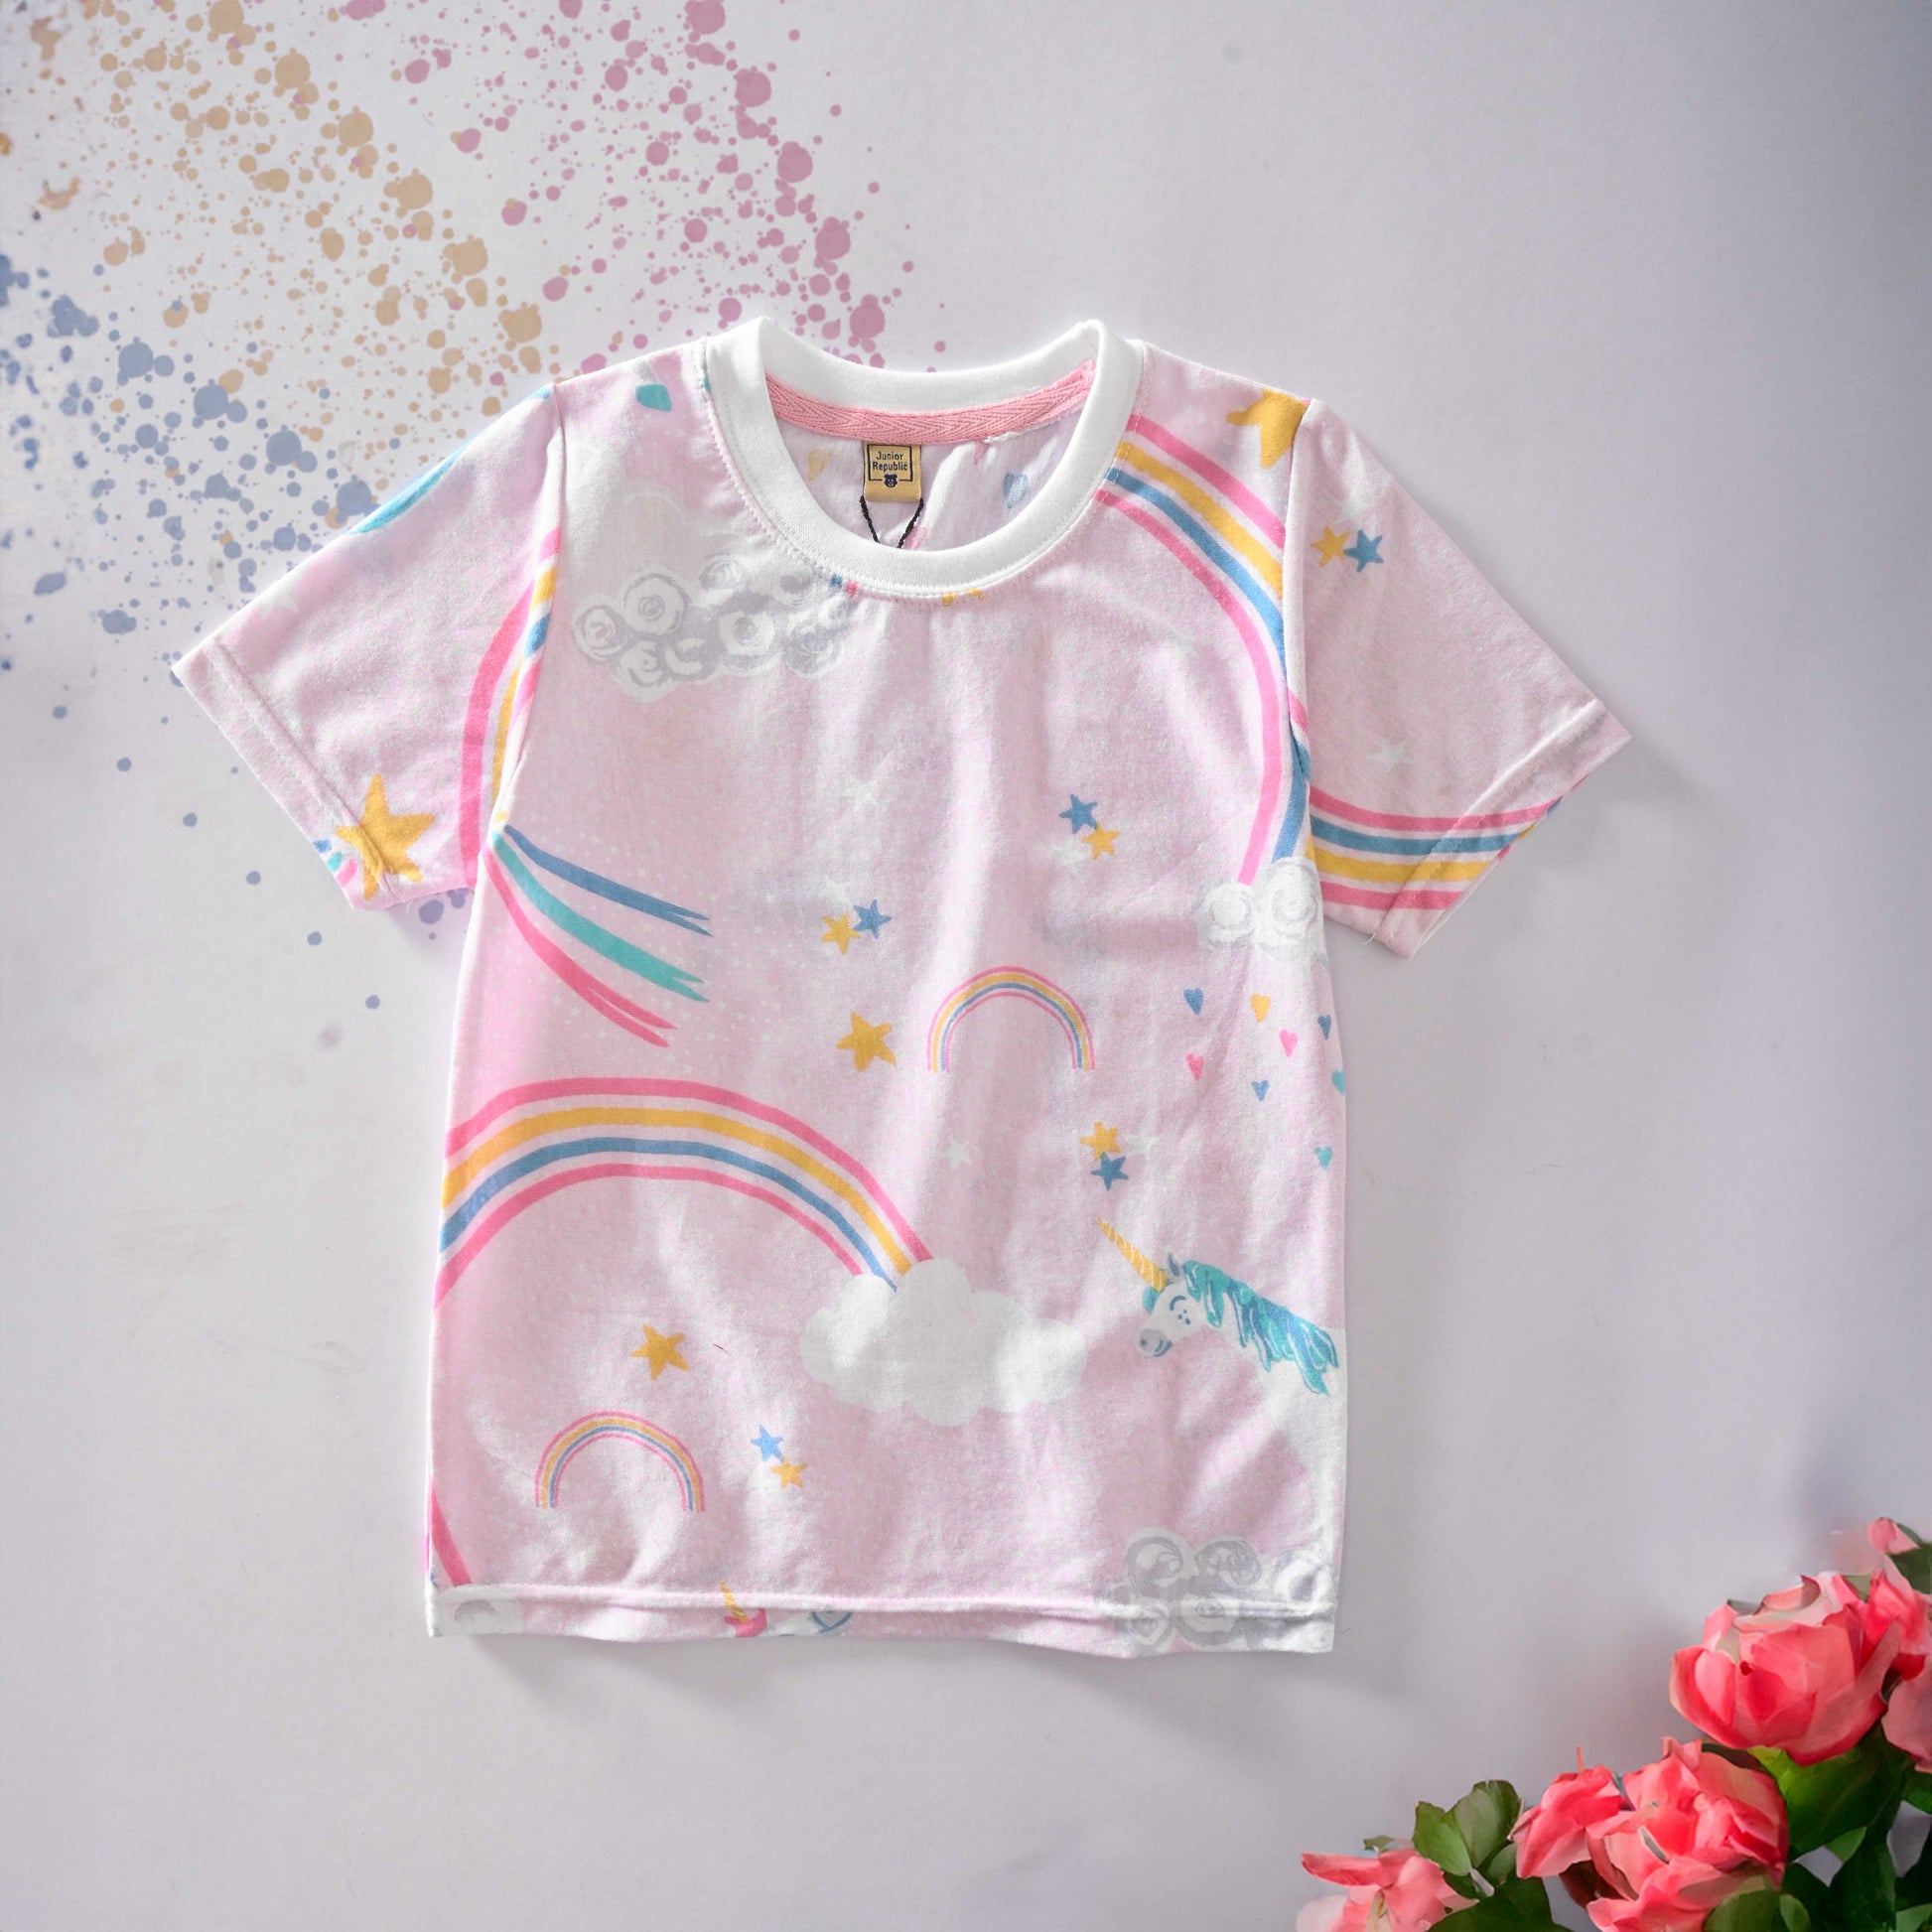 Junior Republic Kid's Rainbow Unicorn Printed Tee Shirt